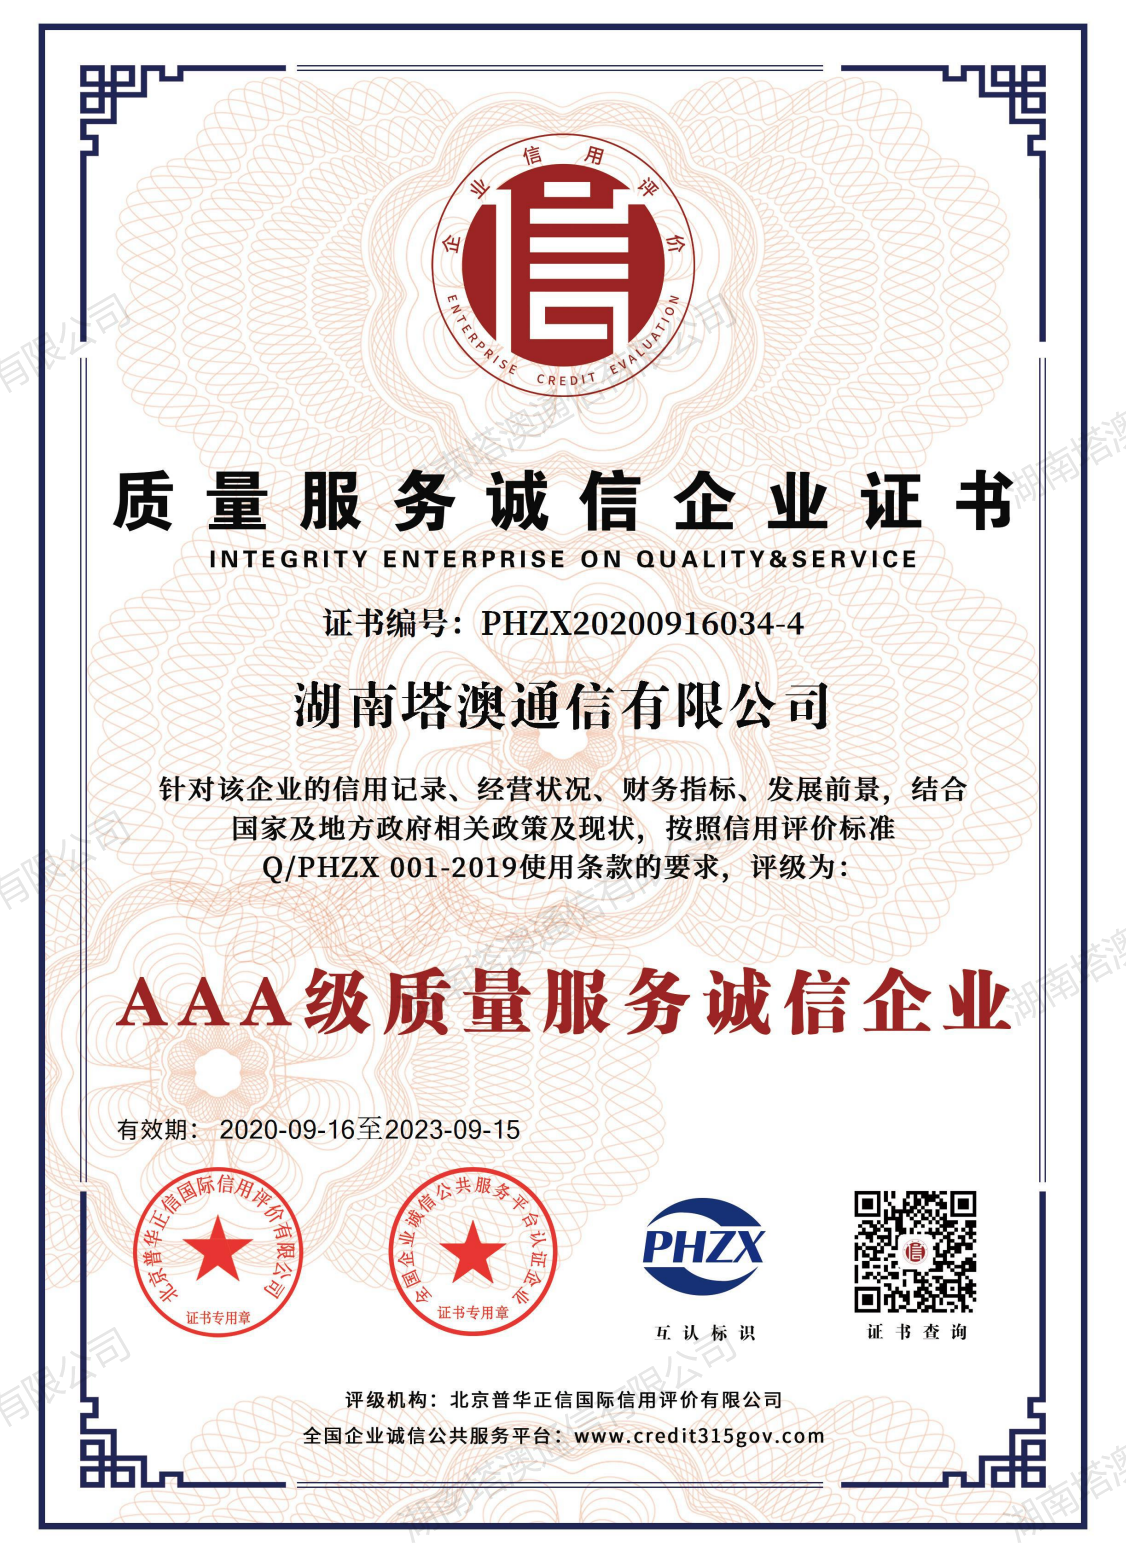 Quality service integrity enterprise certificate